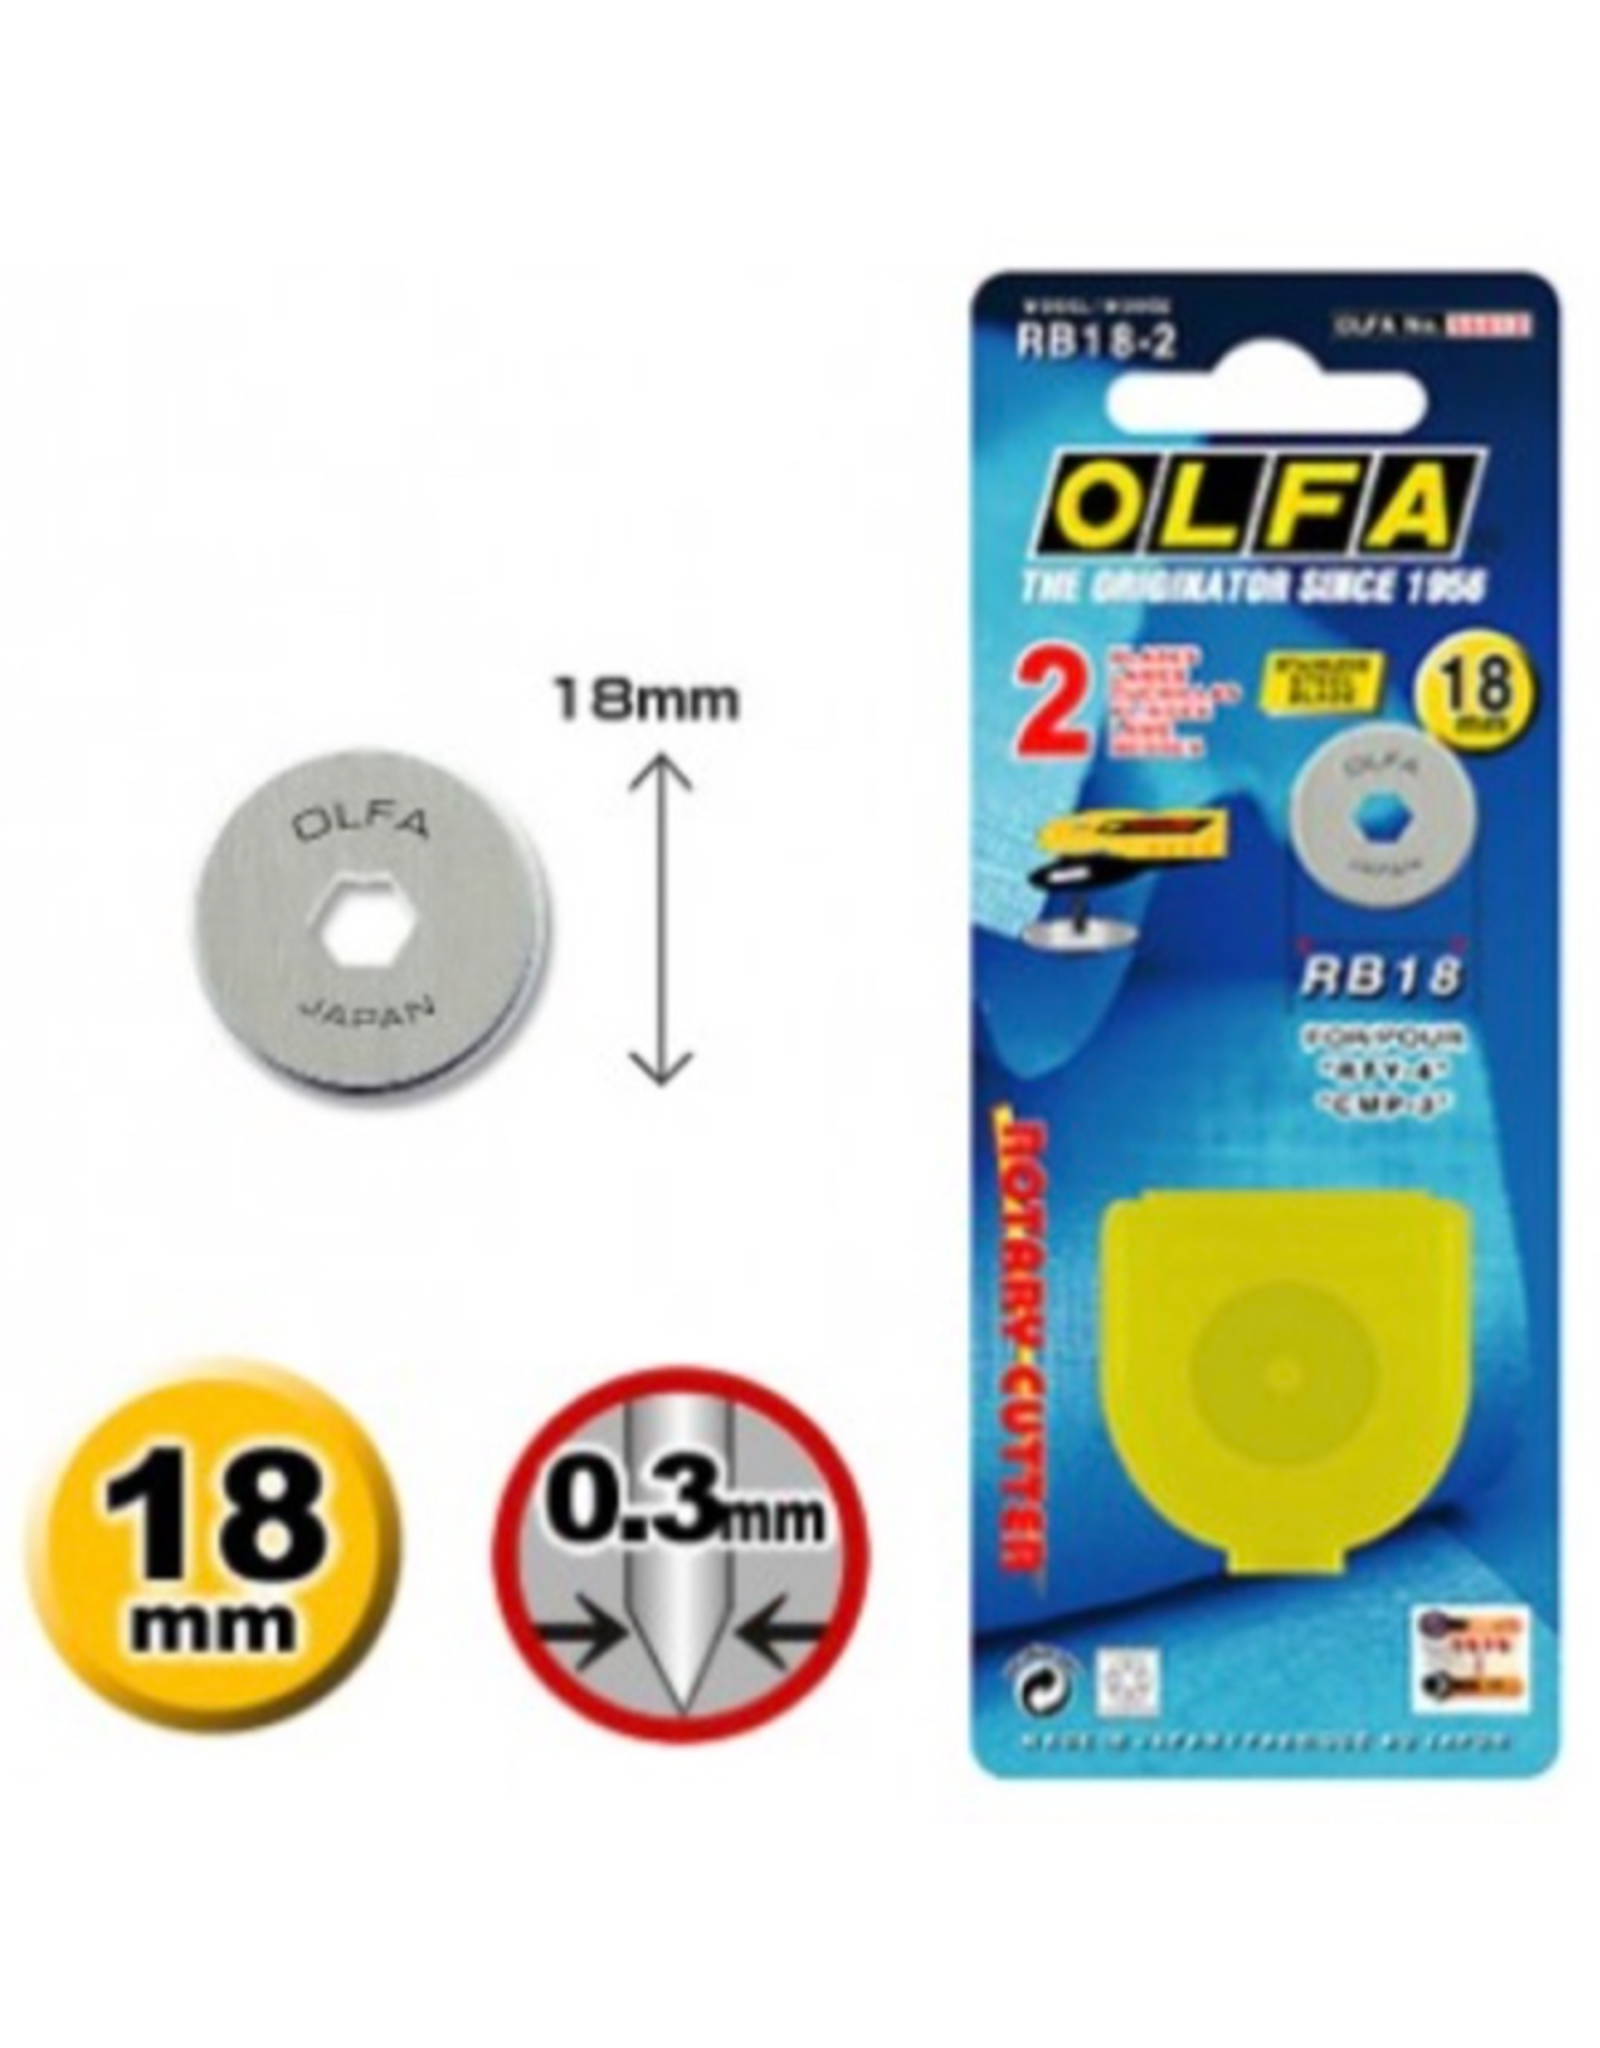 Olfa Olfa replacement blade 18mm - 2 pcs